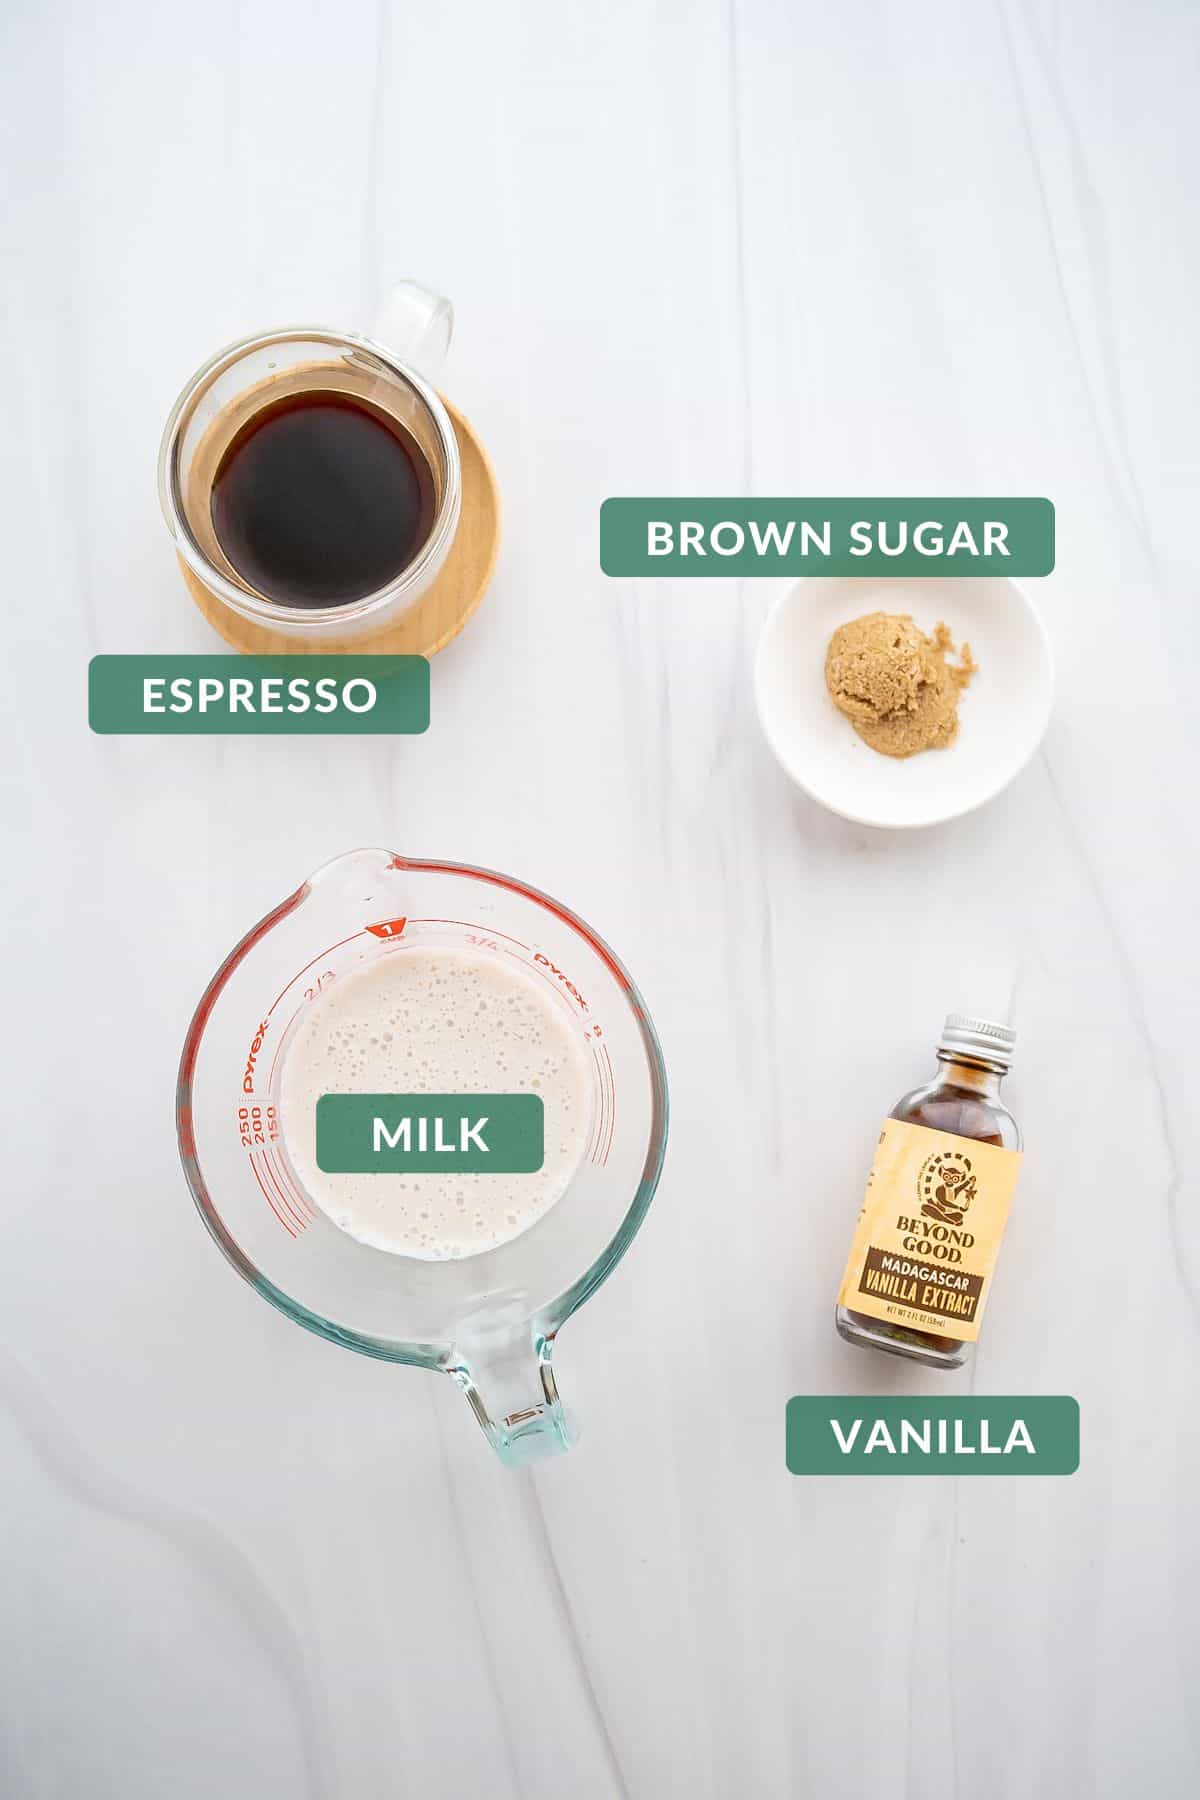 The 4 ingredients needed to make brown sugar shaken espresso: milk, brown sugar, espresso, and vanilla extract.